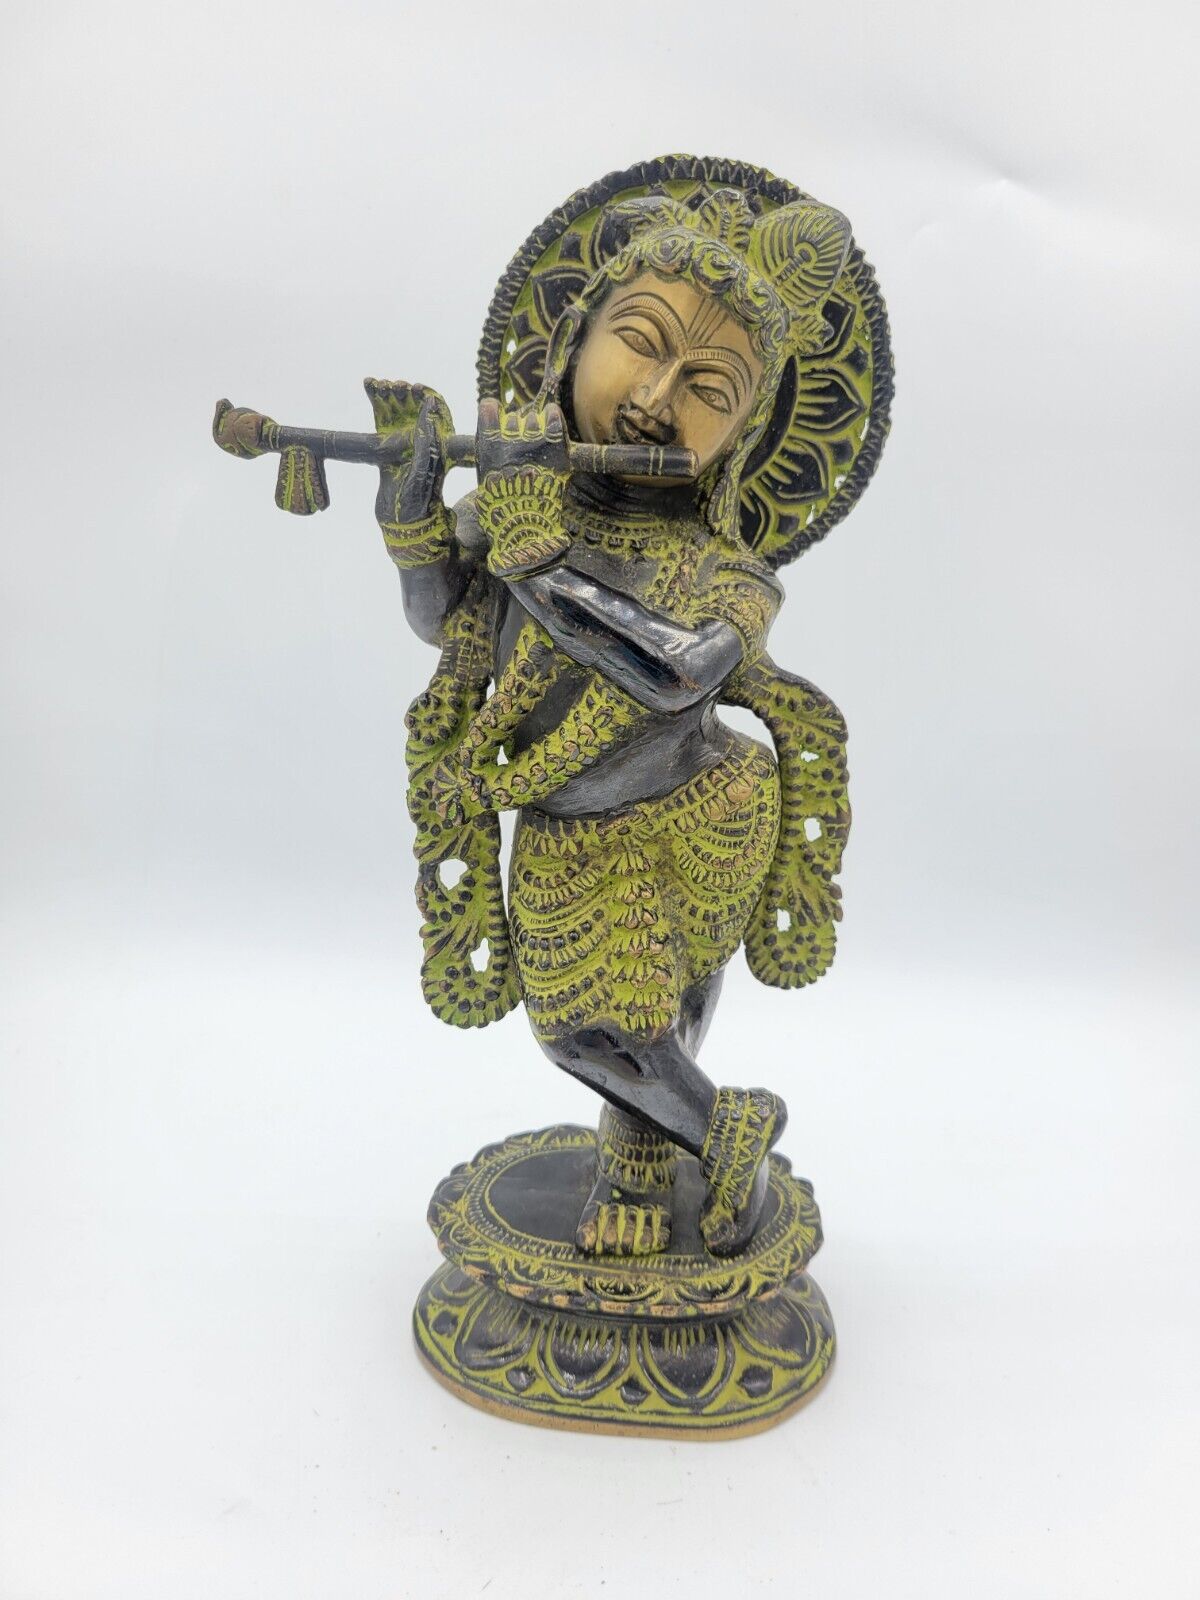 Antique Metal India Lord Krishna with Flute Murti Statue Sculpture Figurine